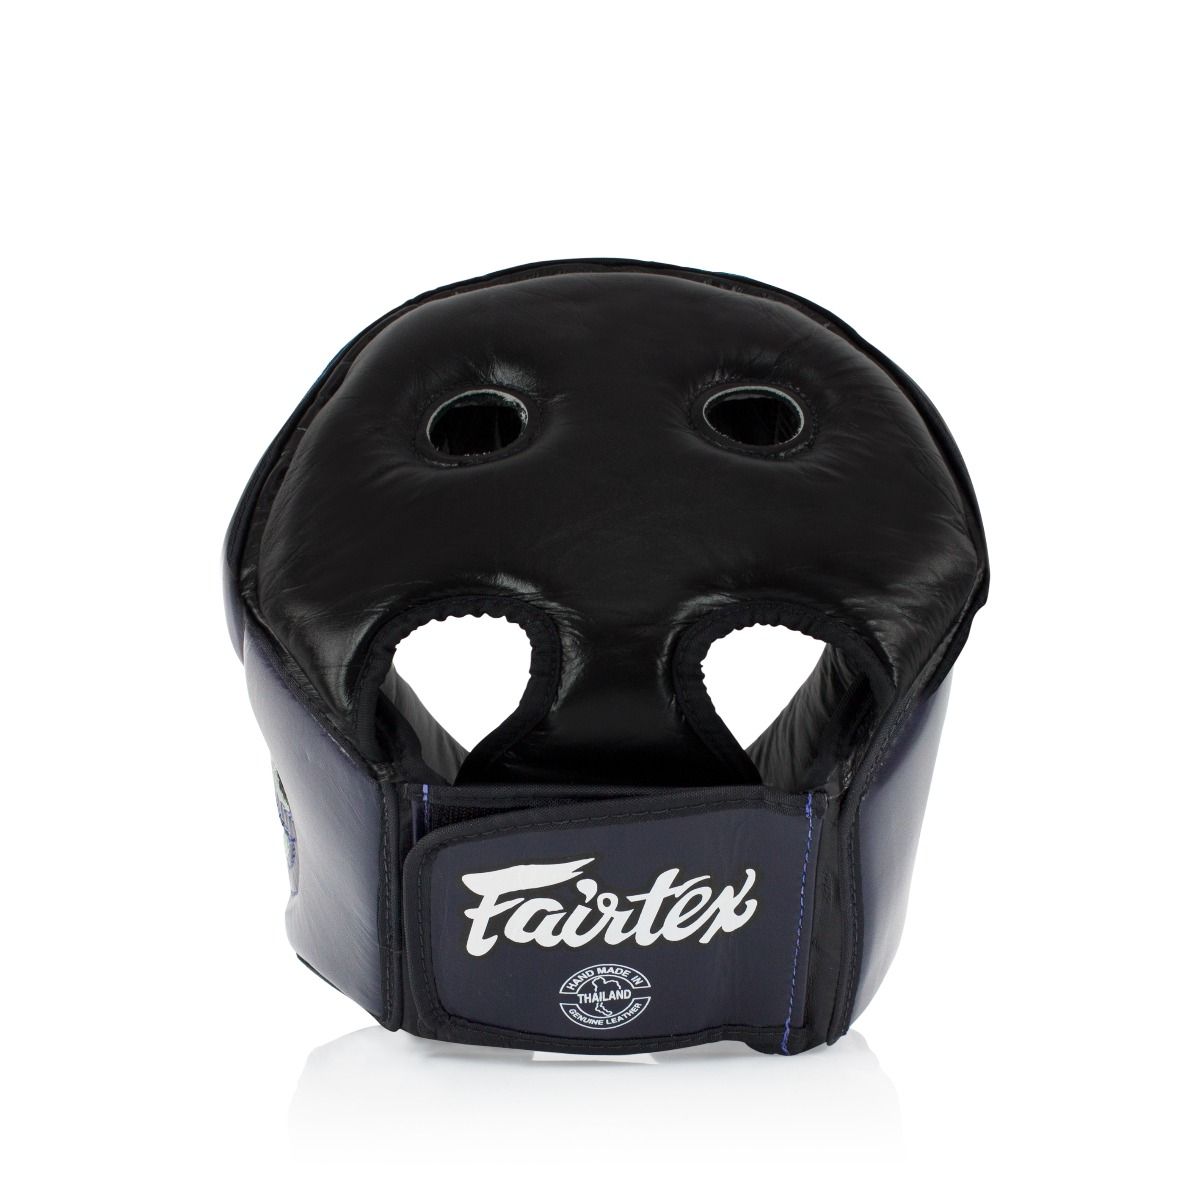 FAIRTEX HEAD PROTECTION HG9 FULL HEAD COVERAGE MUAY THAI & KICKBOXING COMPETITION HEADGUARD